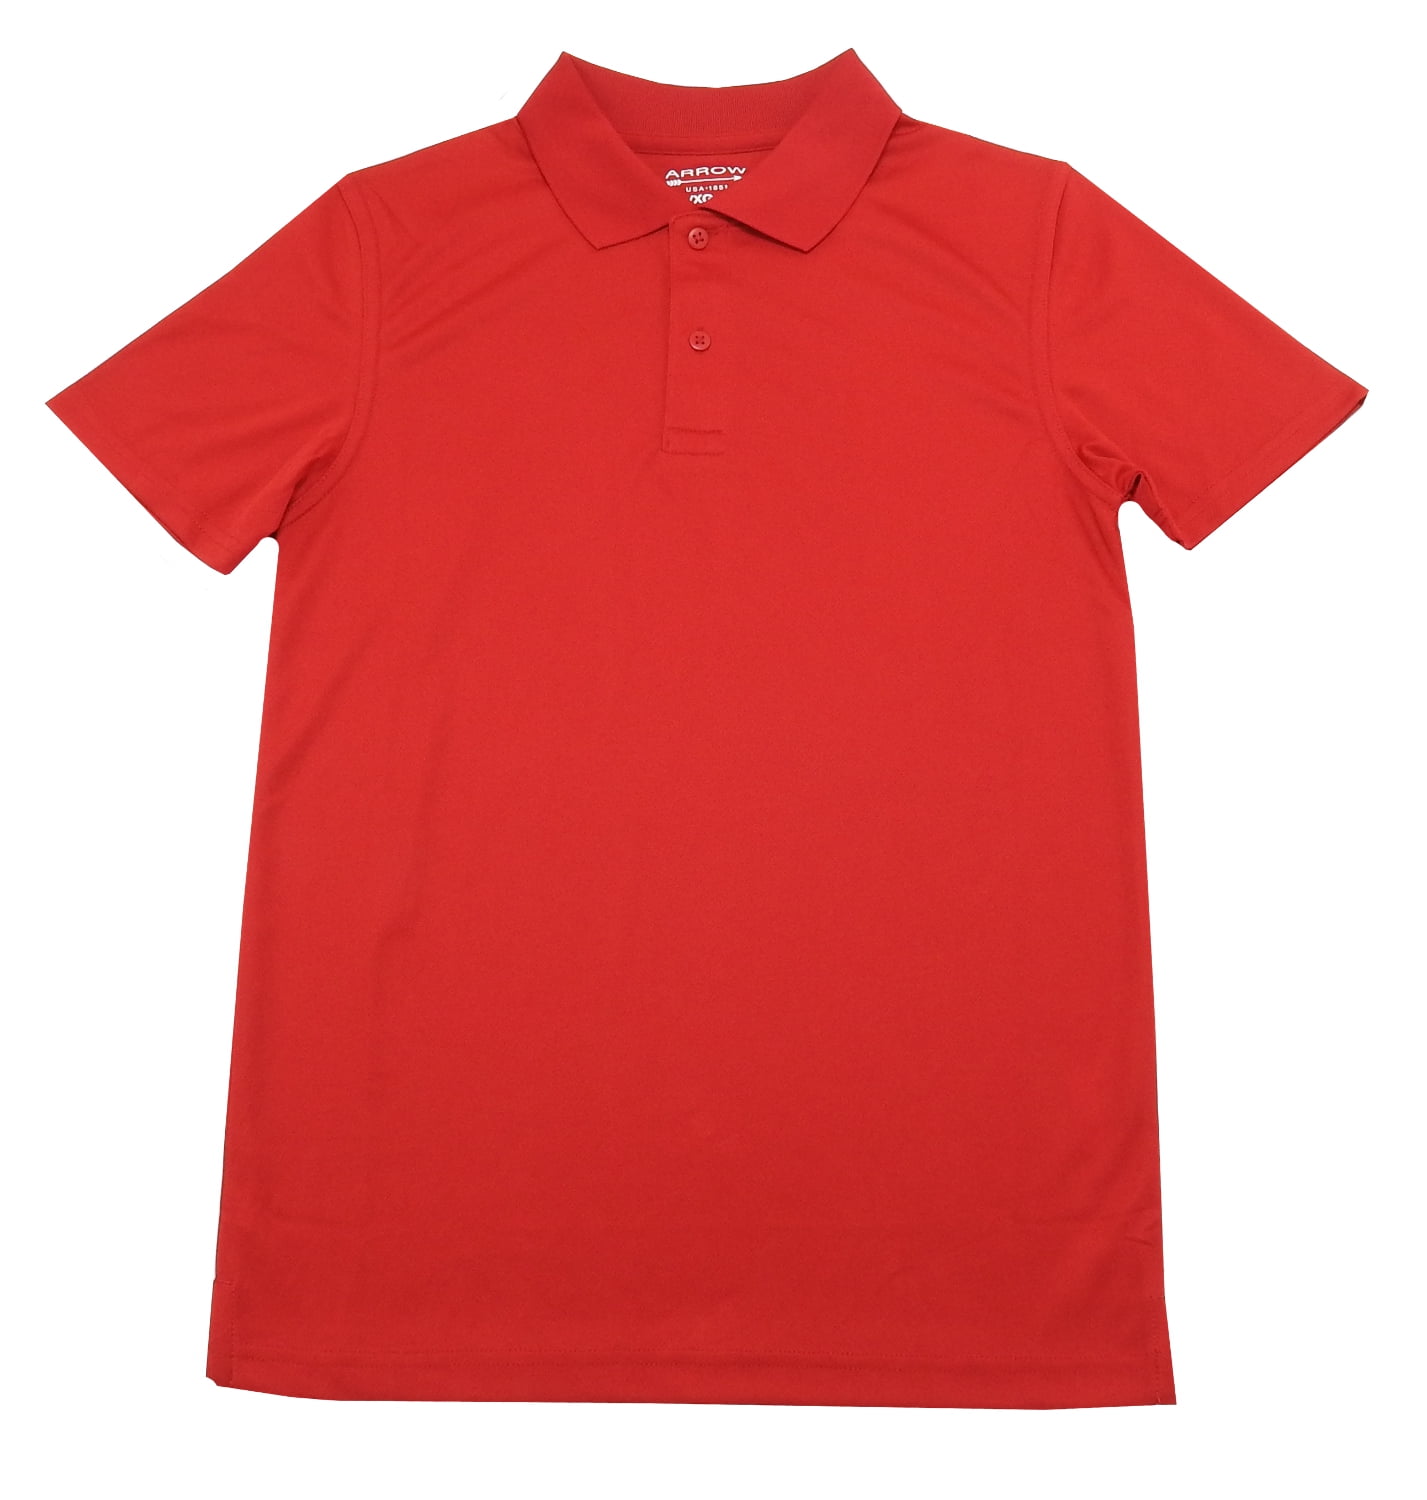 NWT Boys ARROW Red School Uniform Polo Shirt Size Large L 12-14 